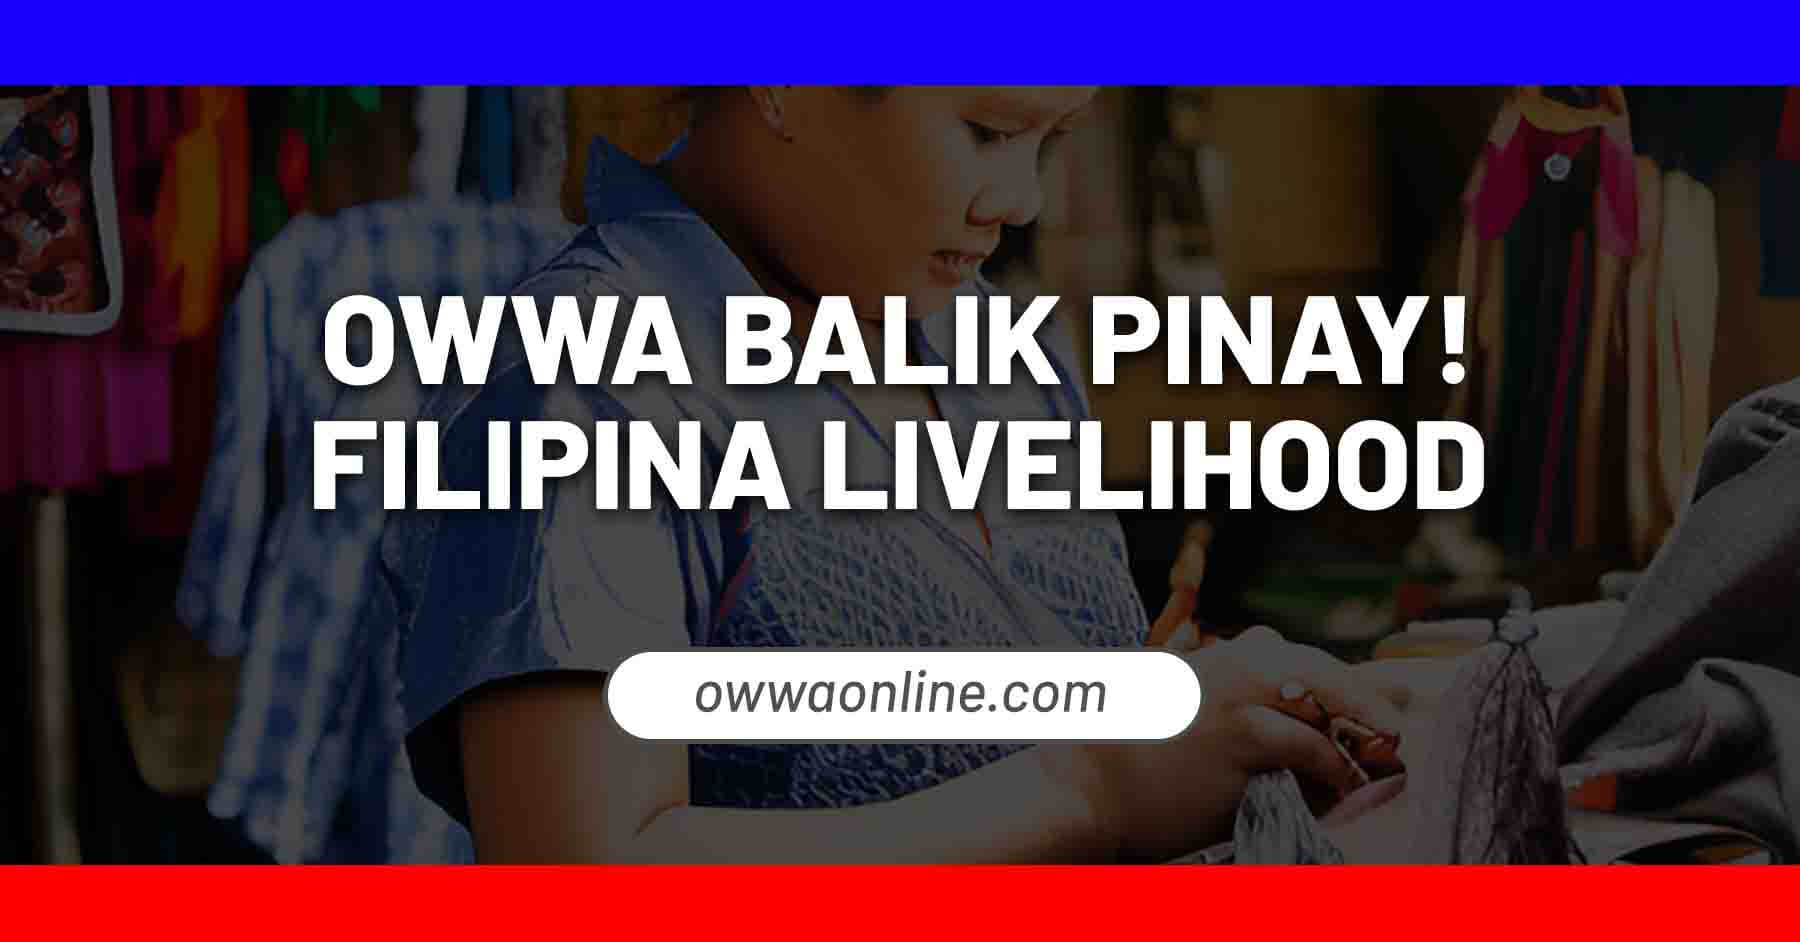 owwa balik pinay filipina livelihood for ofws